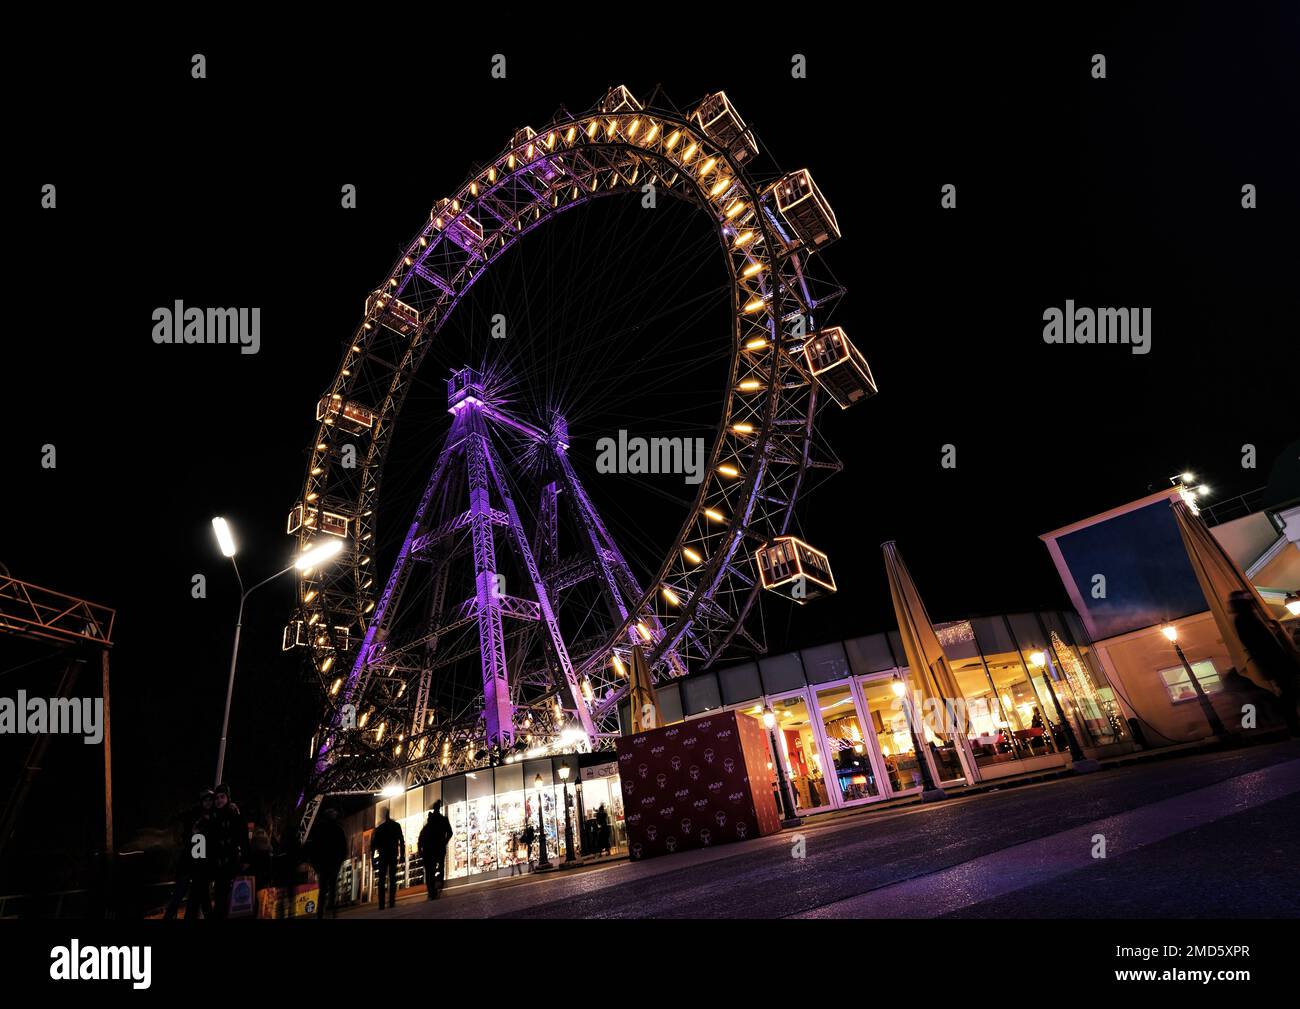 Vienna, Austria, Dec. 2019: View of popular Ferris wheel with colorful illuminated rim at night in amusement park Prater (Wurstelprater) Stock Photo